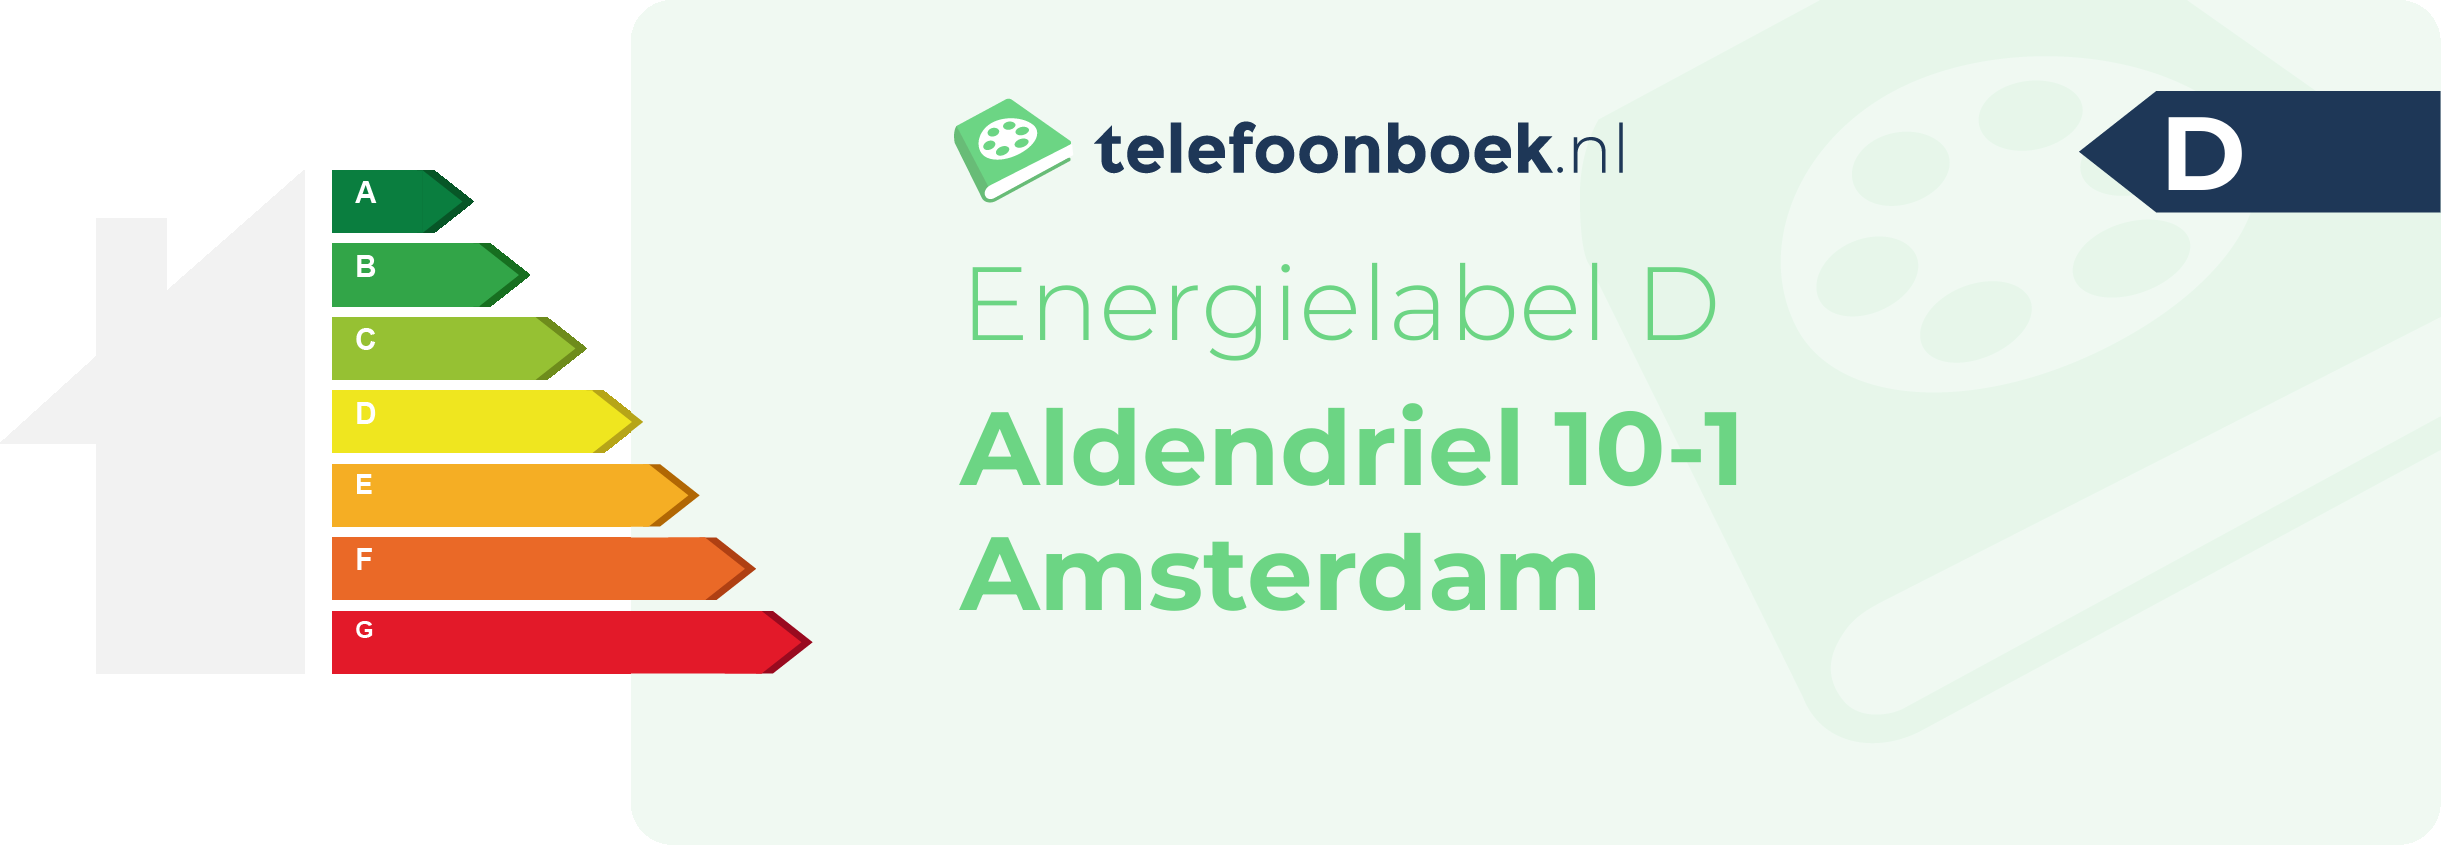 Energielabel Aldendriel 10-1 Amsterdam